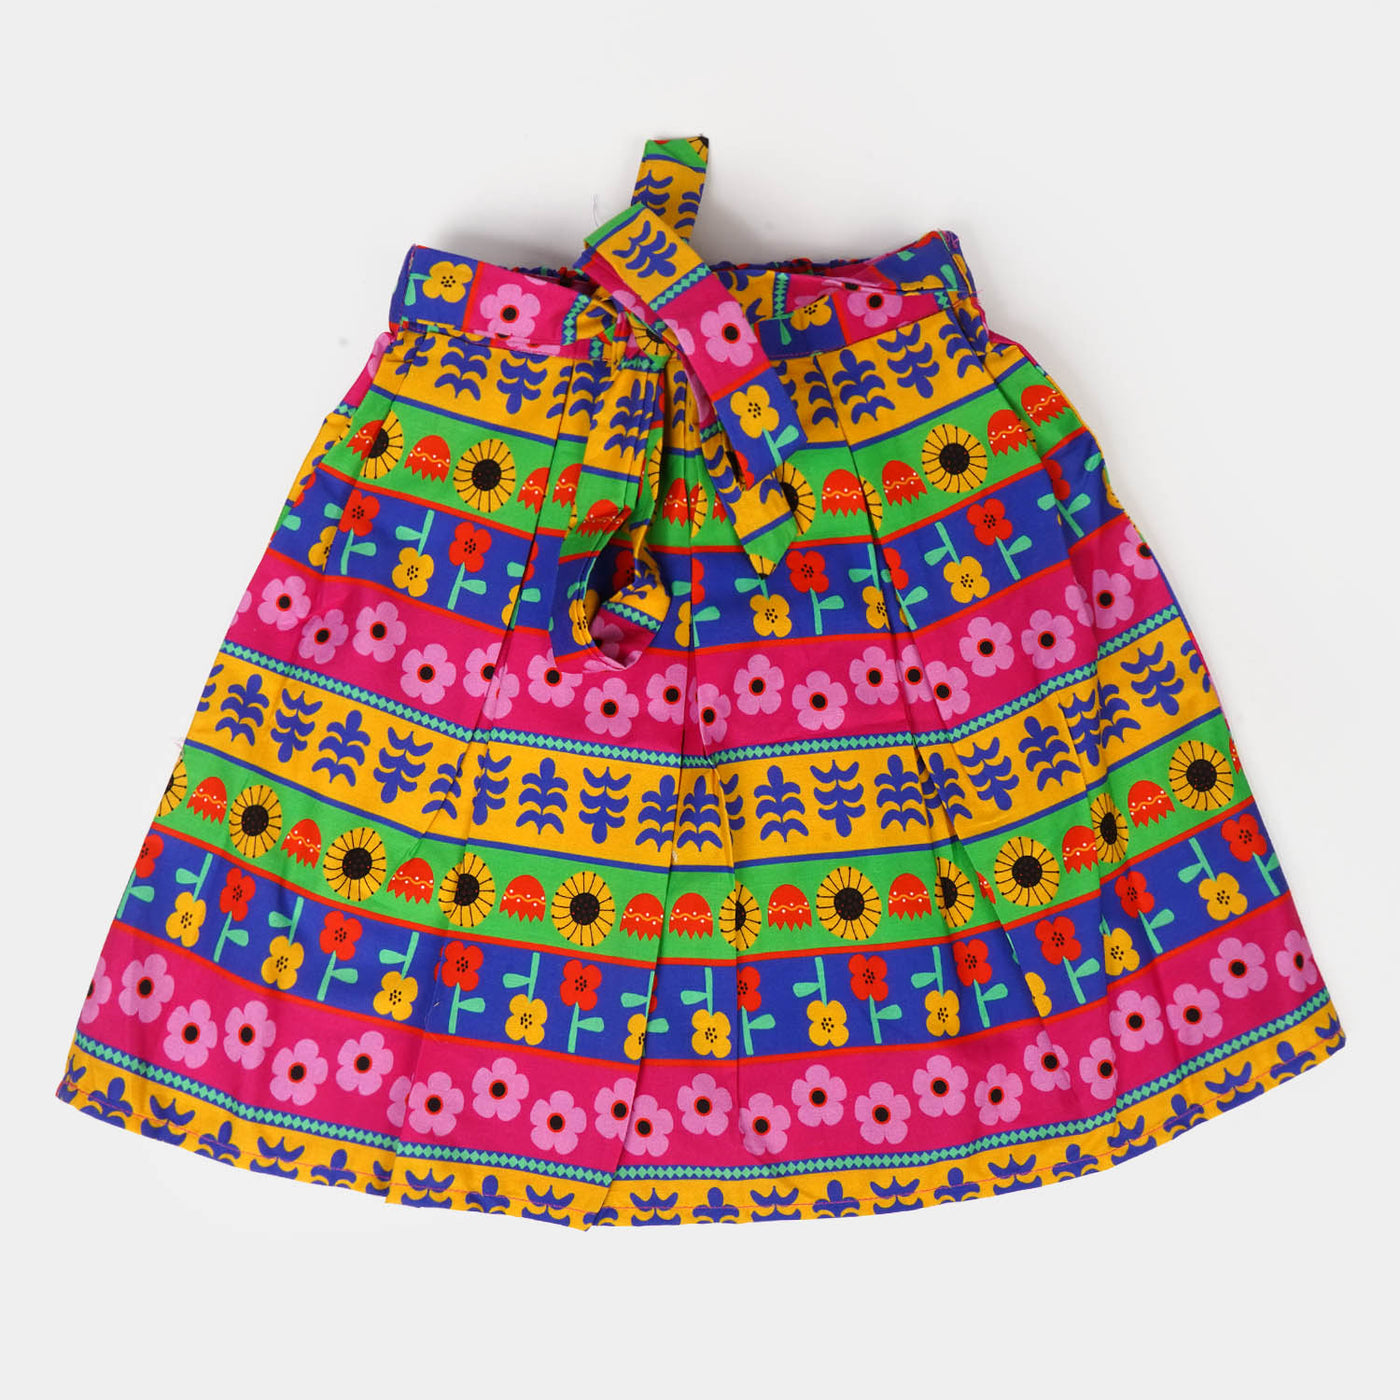 Girls Cotton Casual Skirt - Multi